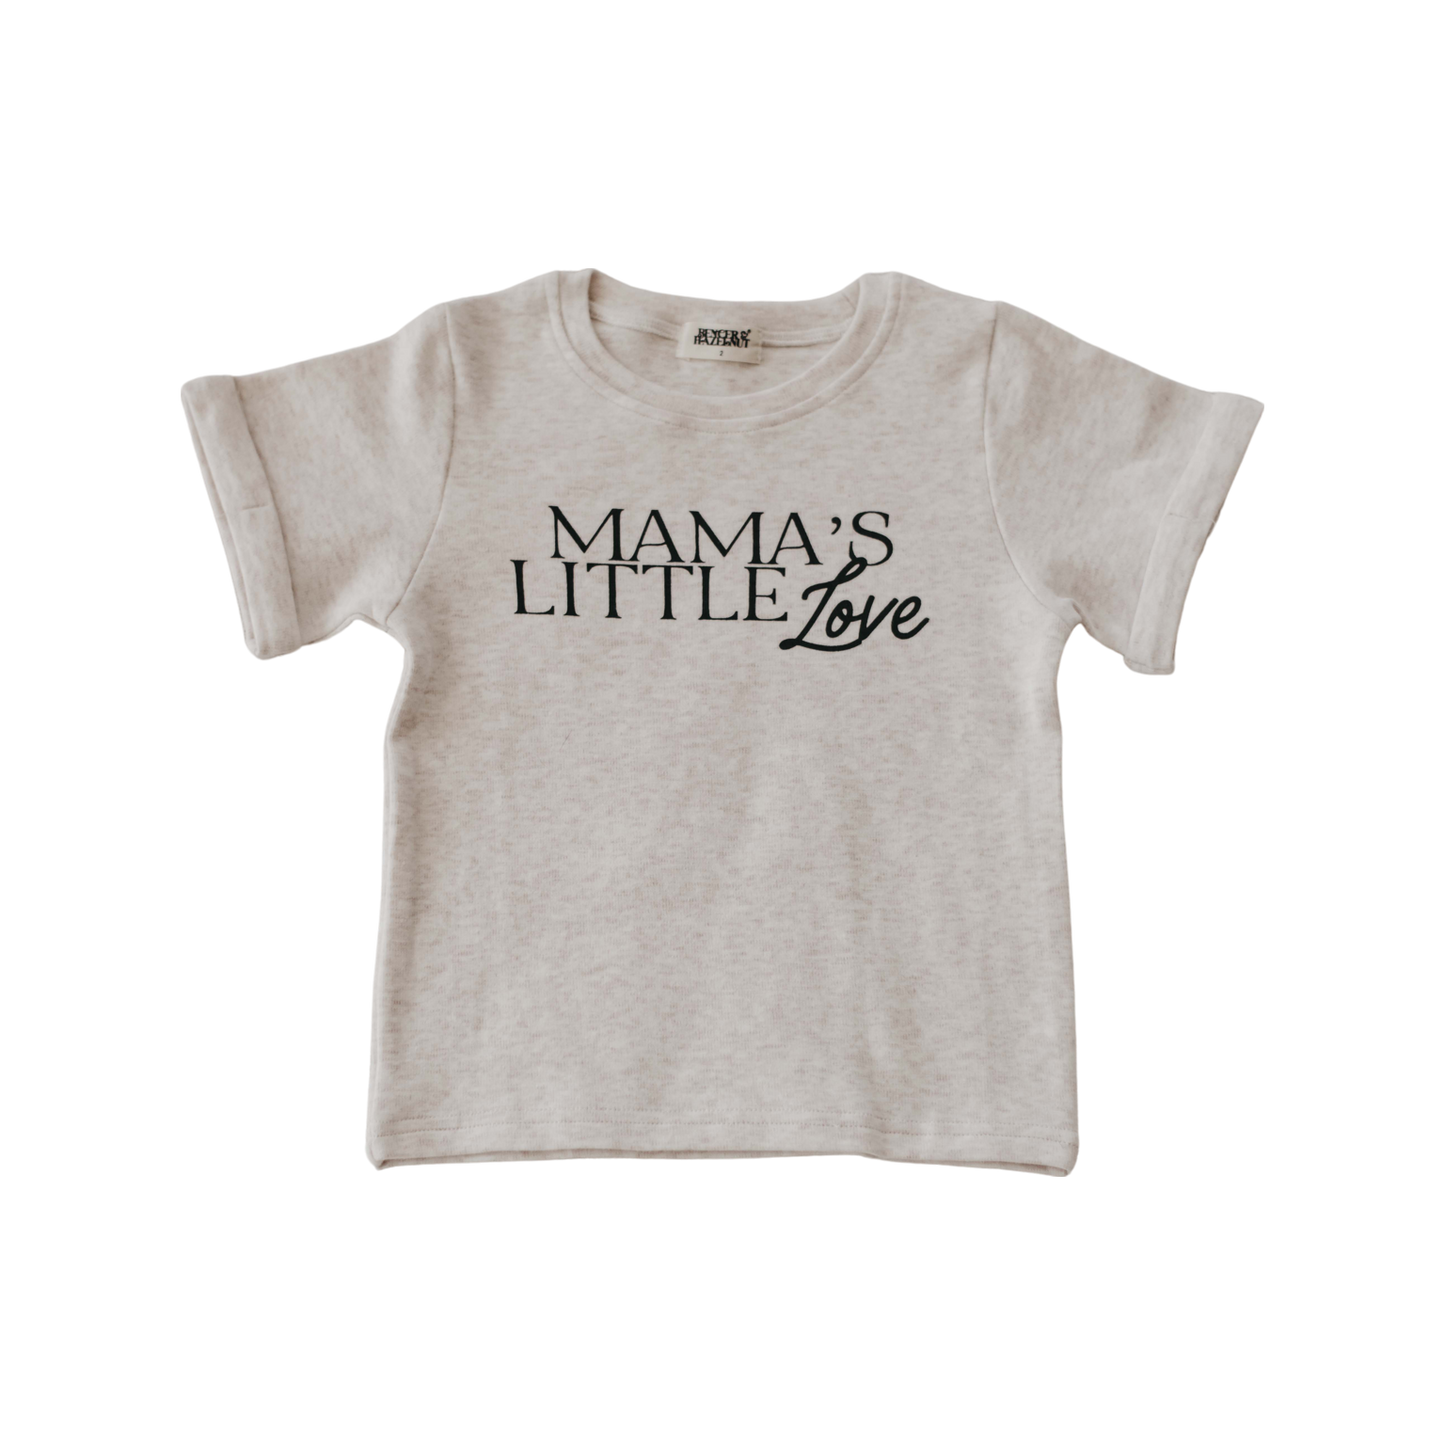 Mama's Little Love Bodysuit/Tee